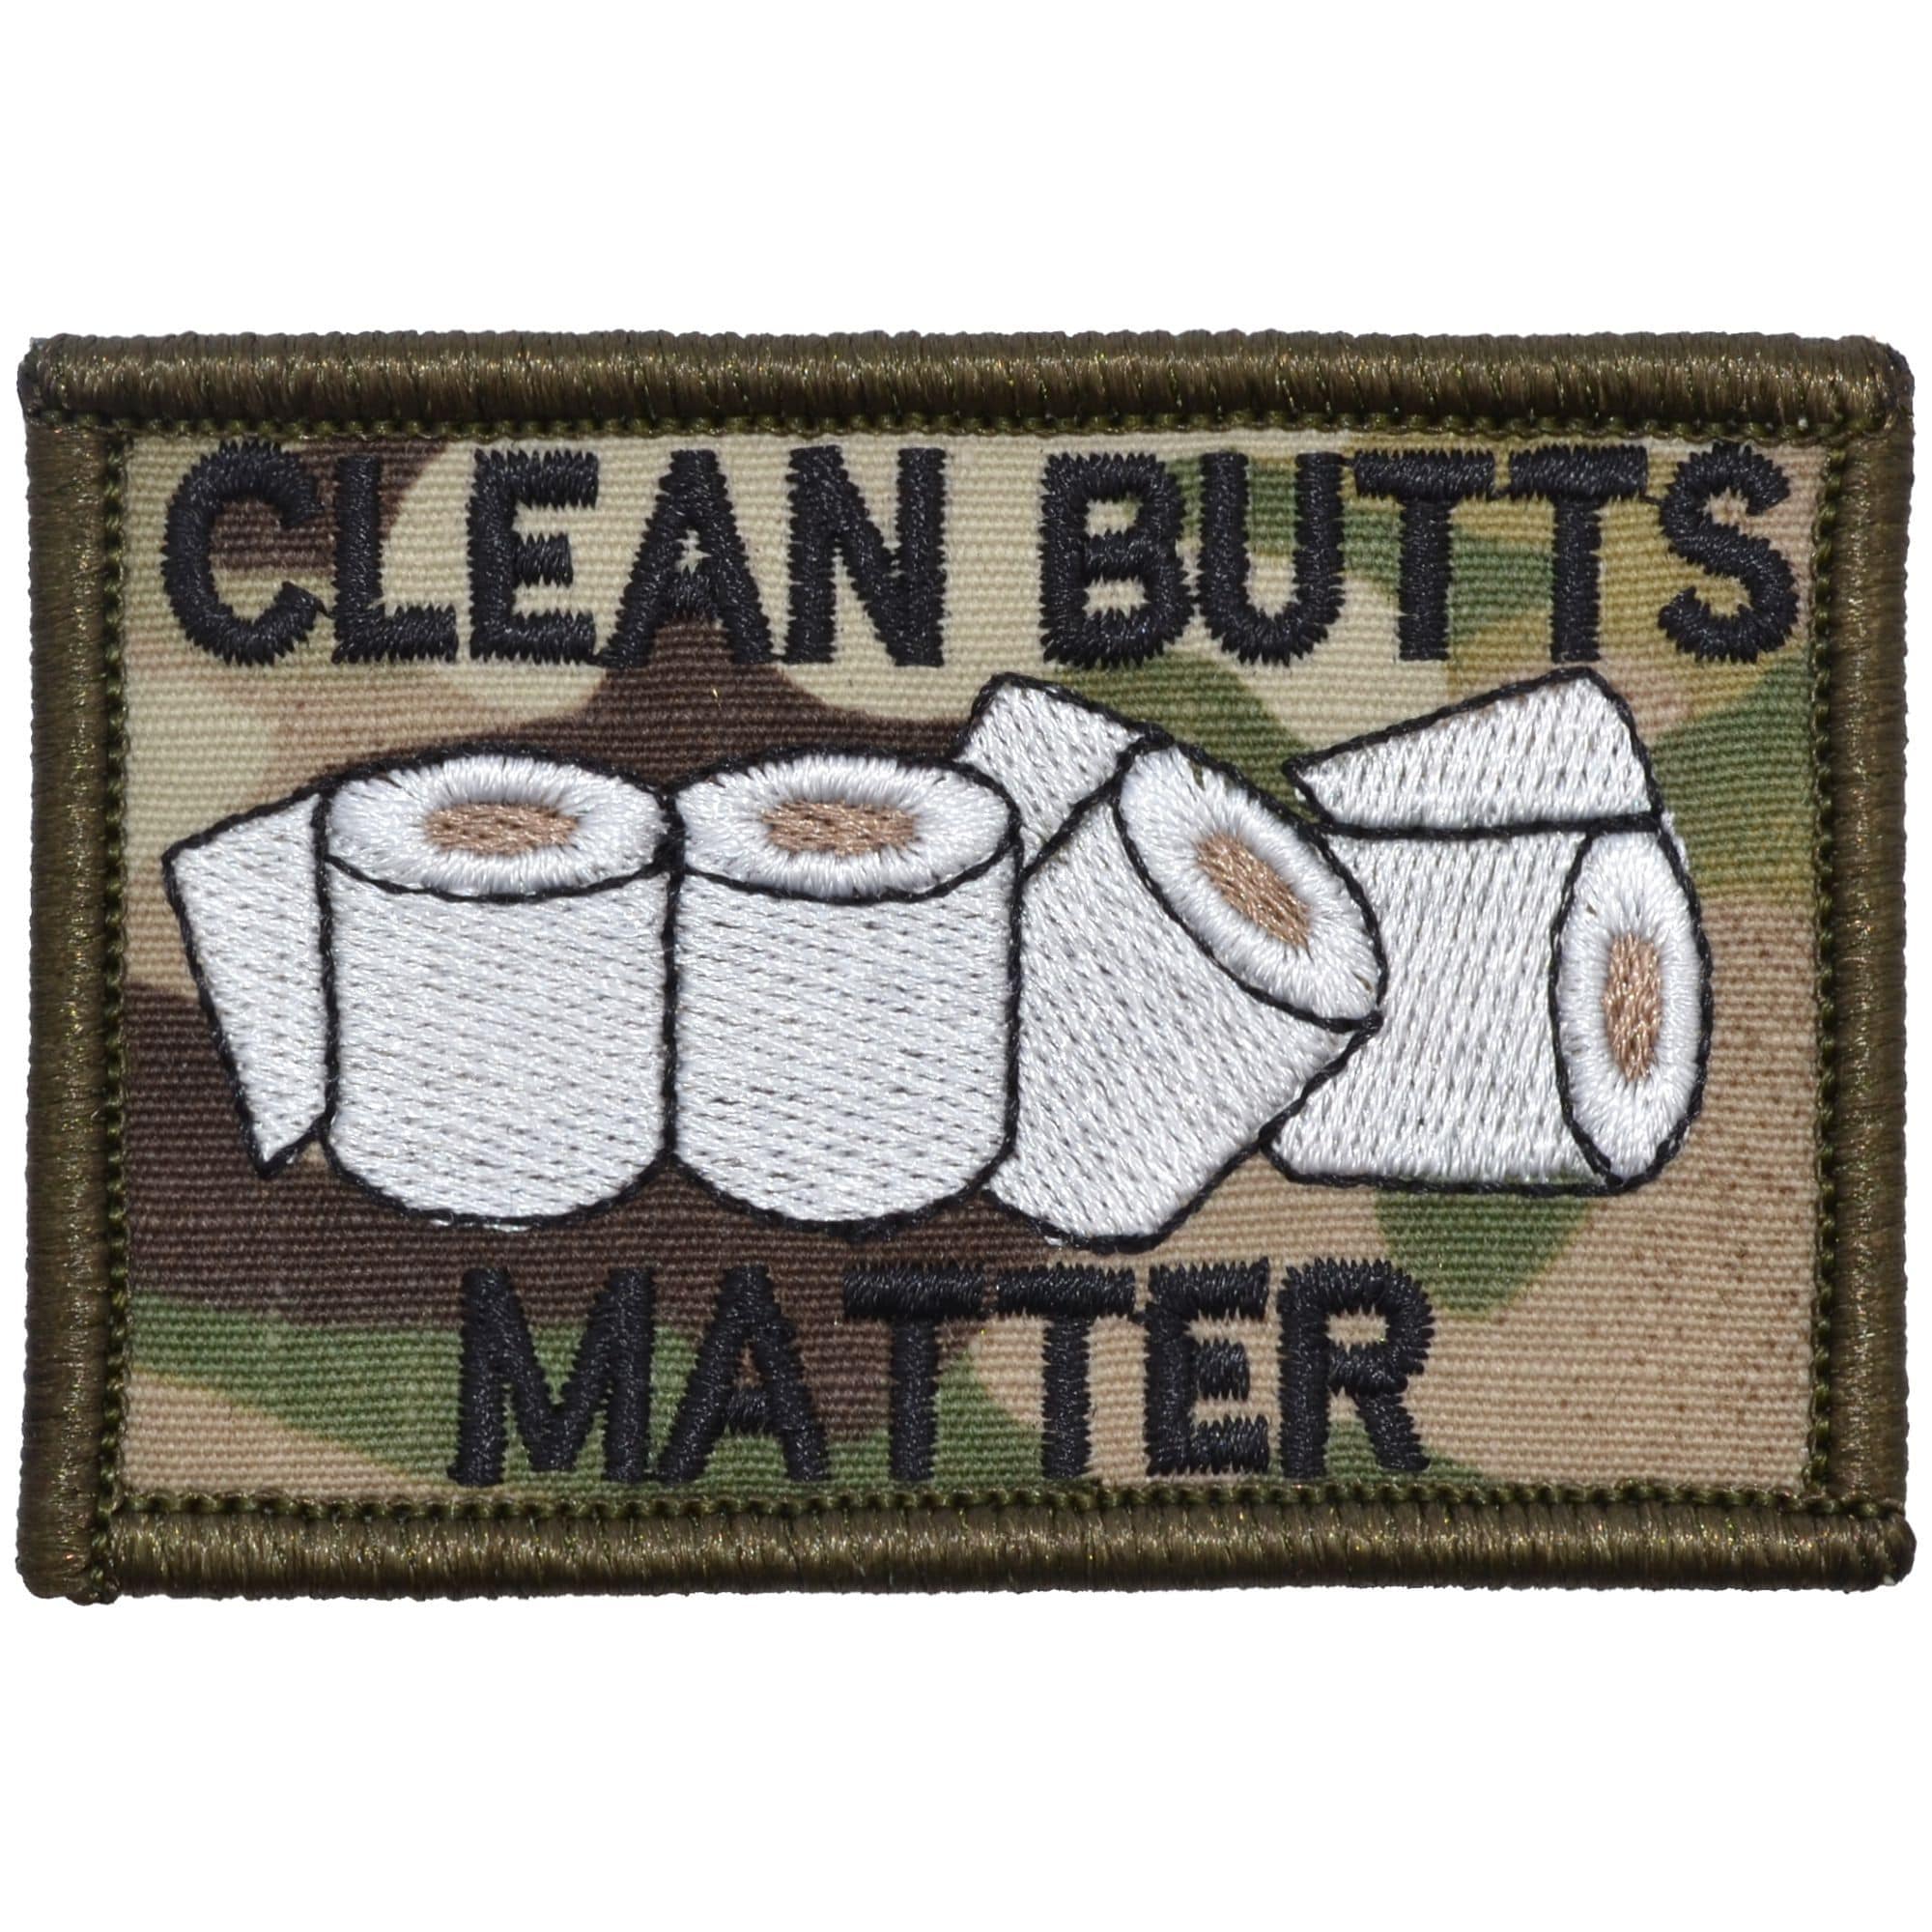 Tactical Gear Junkie Patches MultiCam Clean Butts Matter - 2x3 Patch